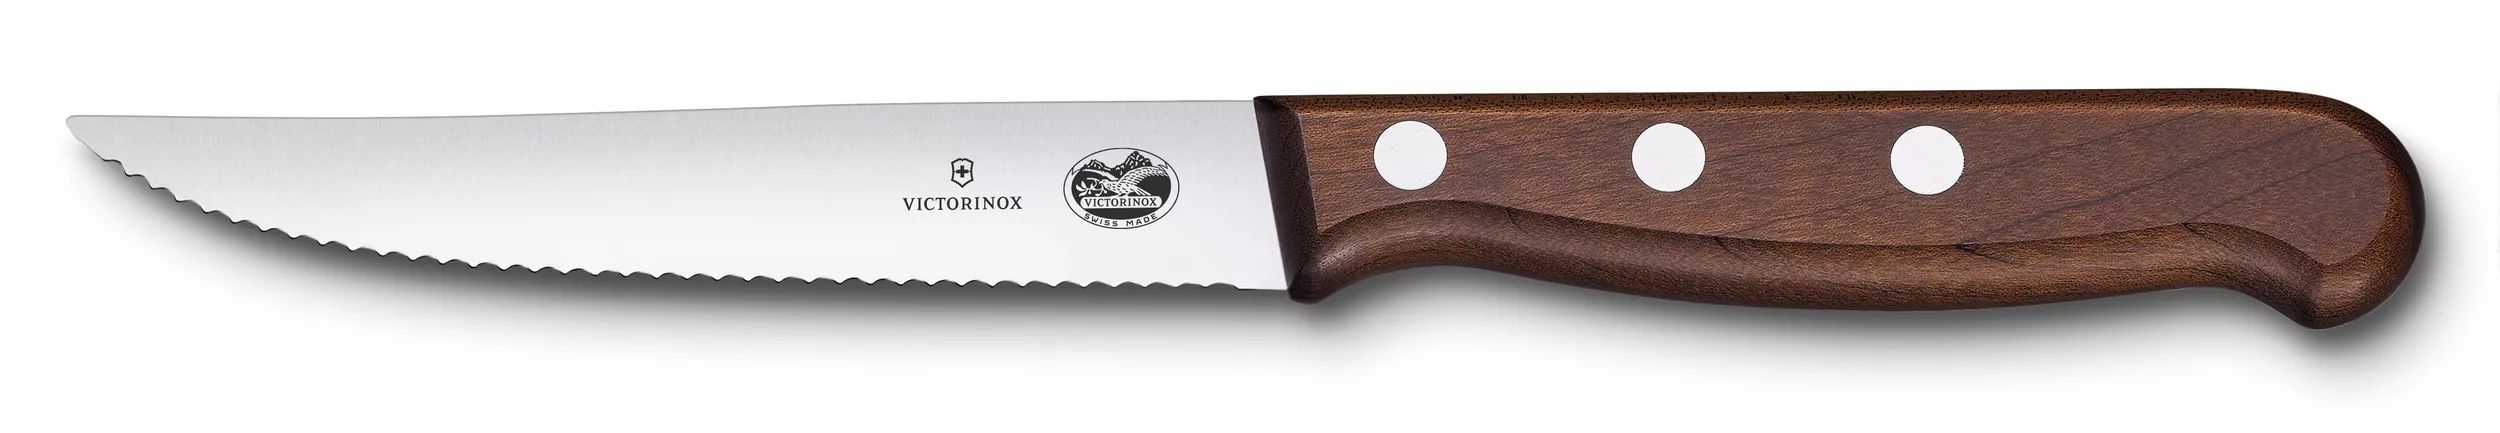 Wood Steak Knife Set, 2 pieces - 5.1230.12G